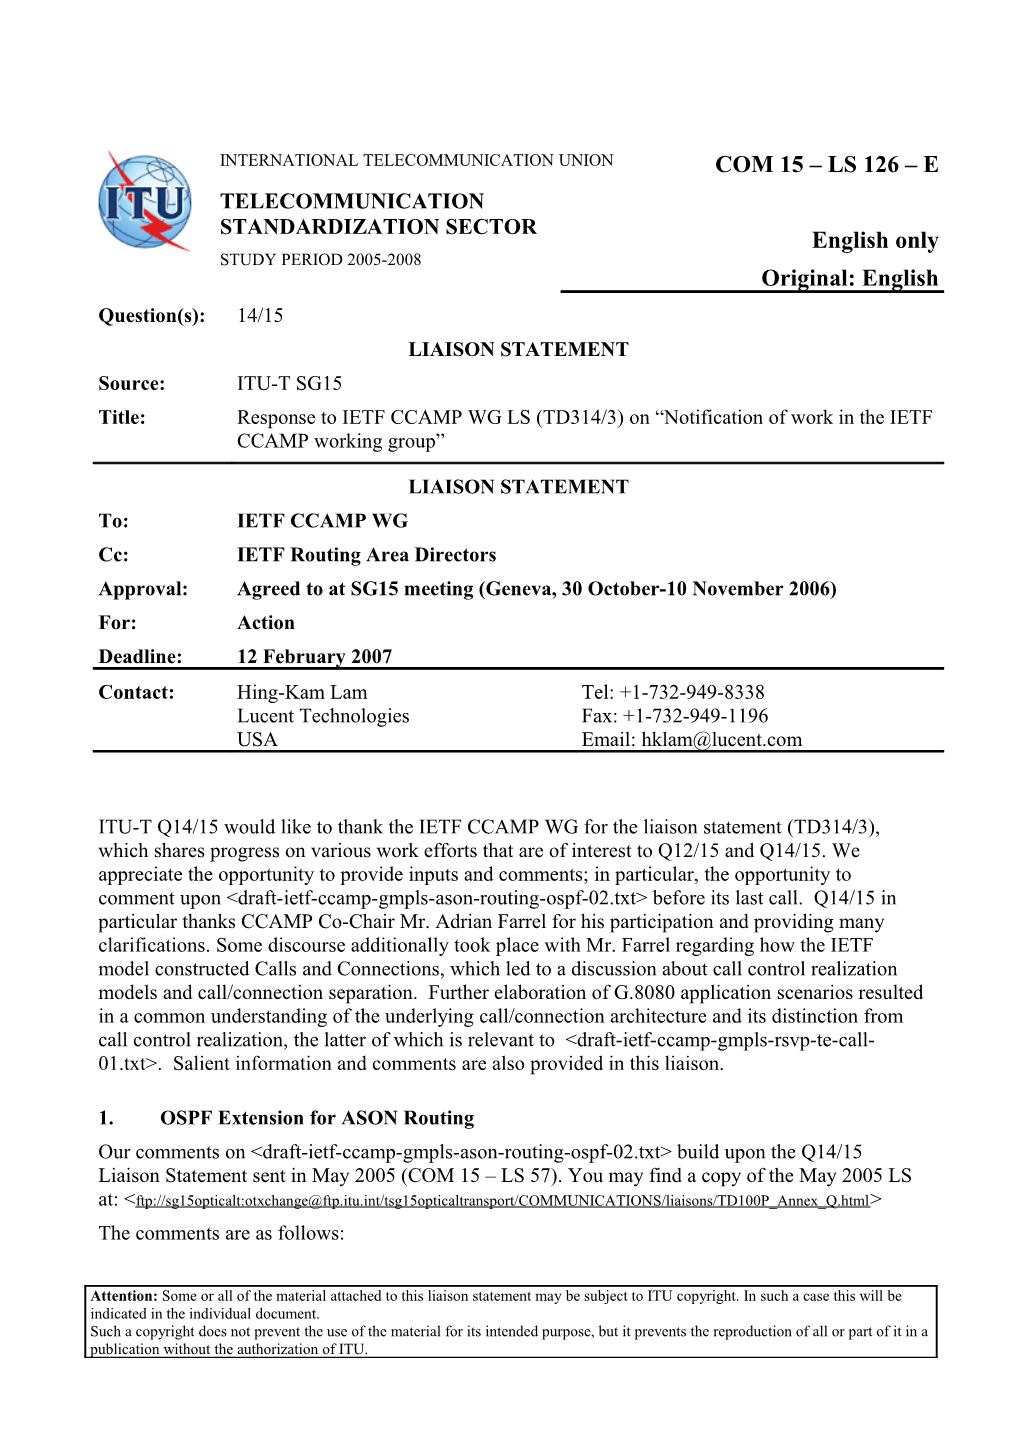 LIAISON STATEMENT: Response to IETF CCAMP WG Liaison Statement (TD314/3) on Notification